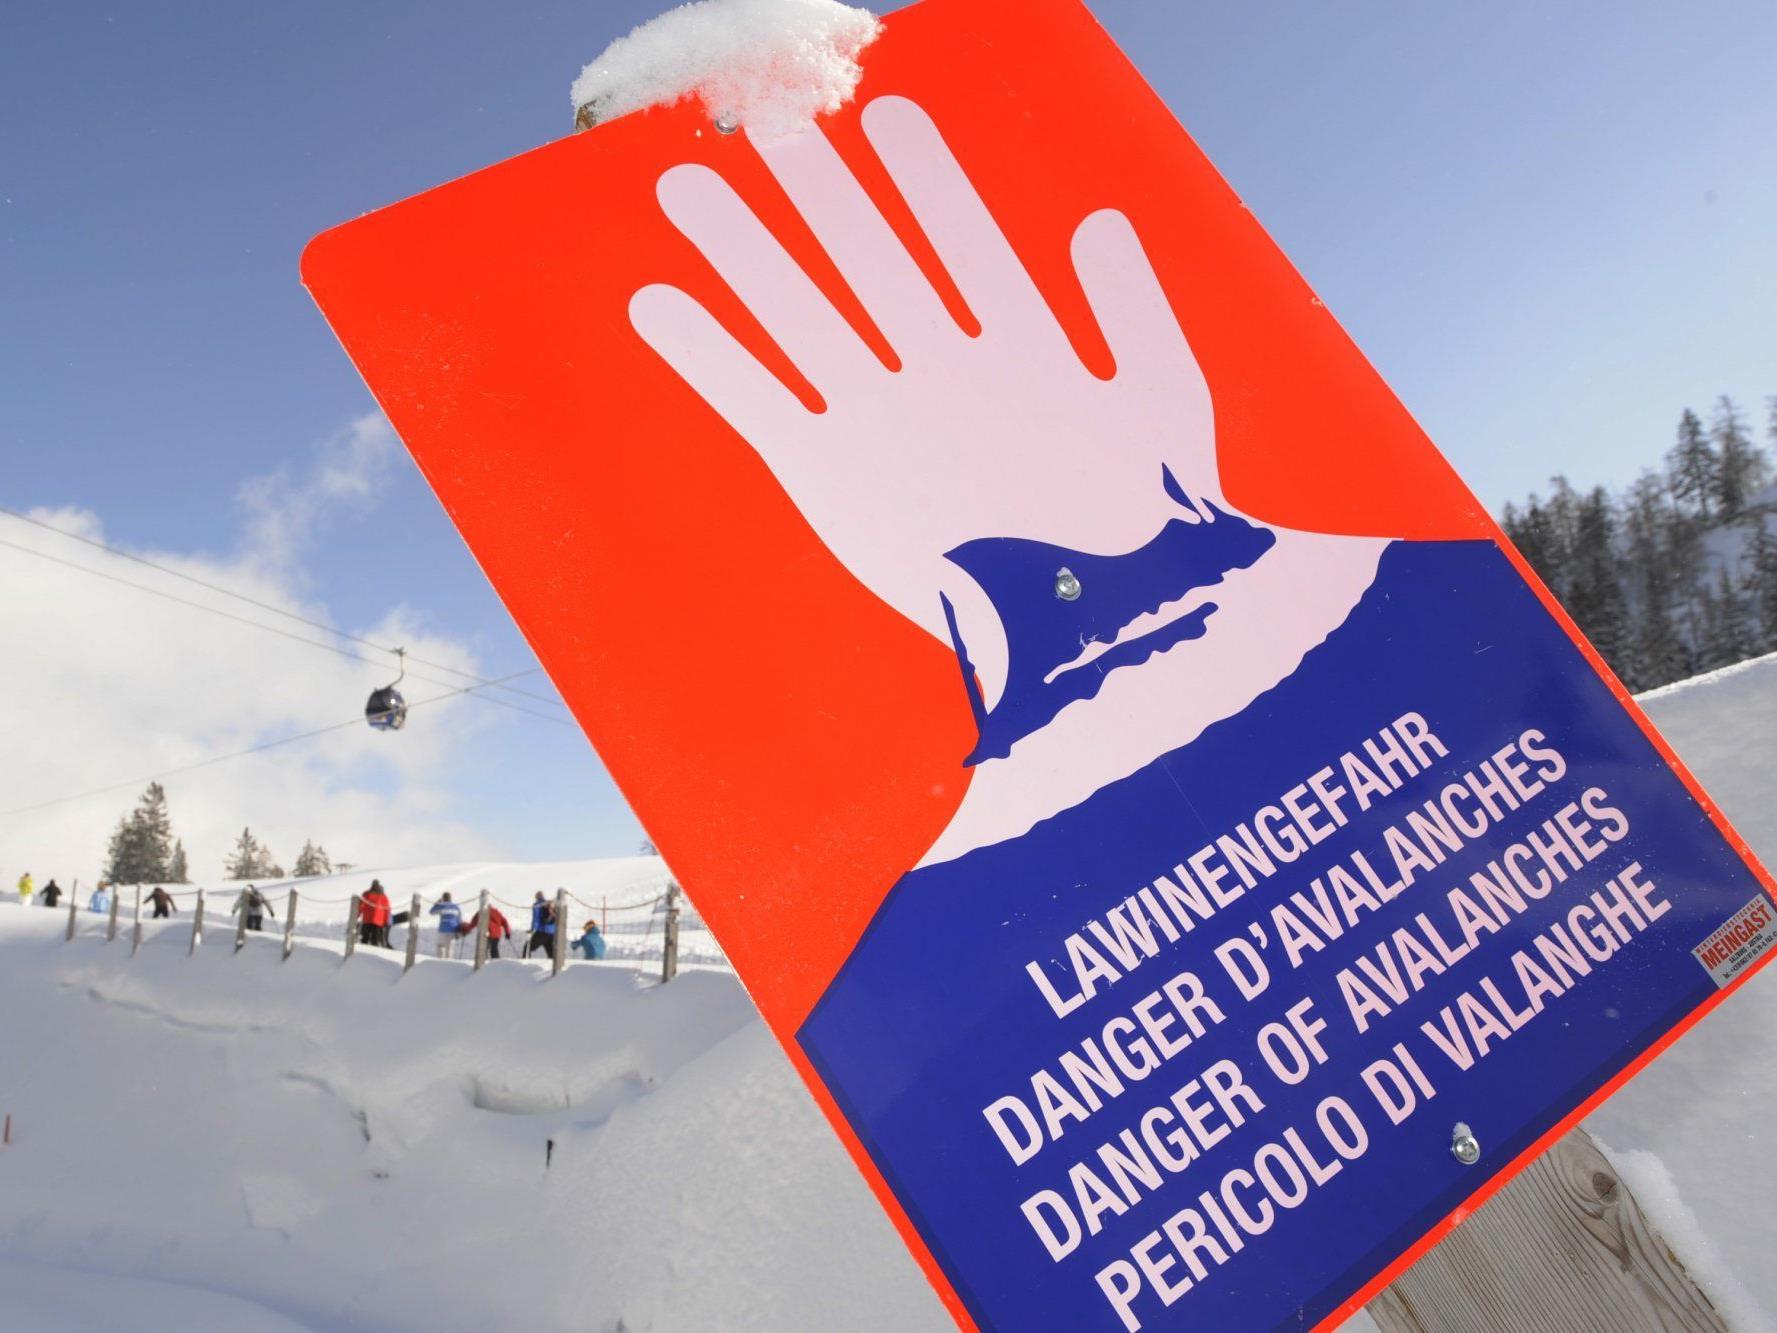 Verunglückter Vorarlberger war Snowboardlehrer im Pitztal.